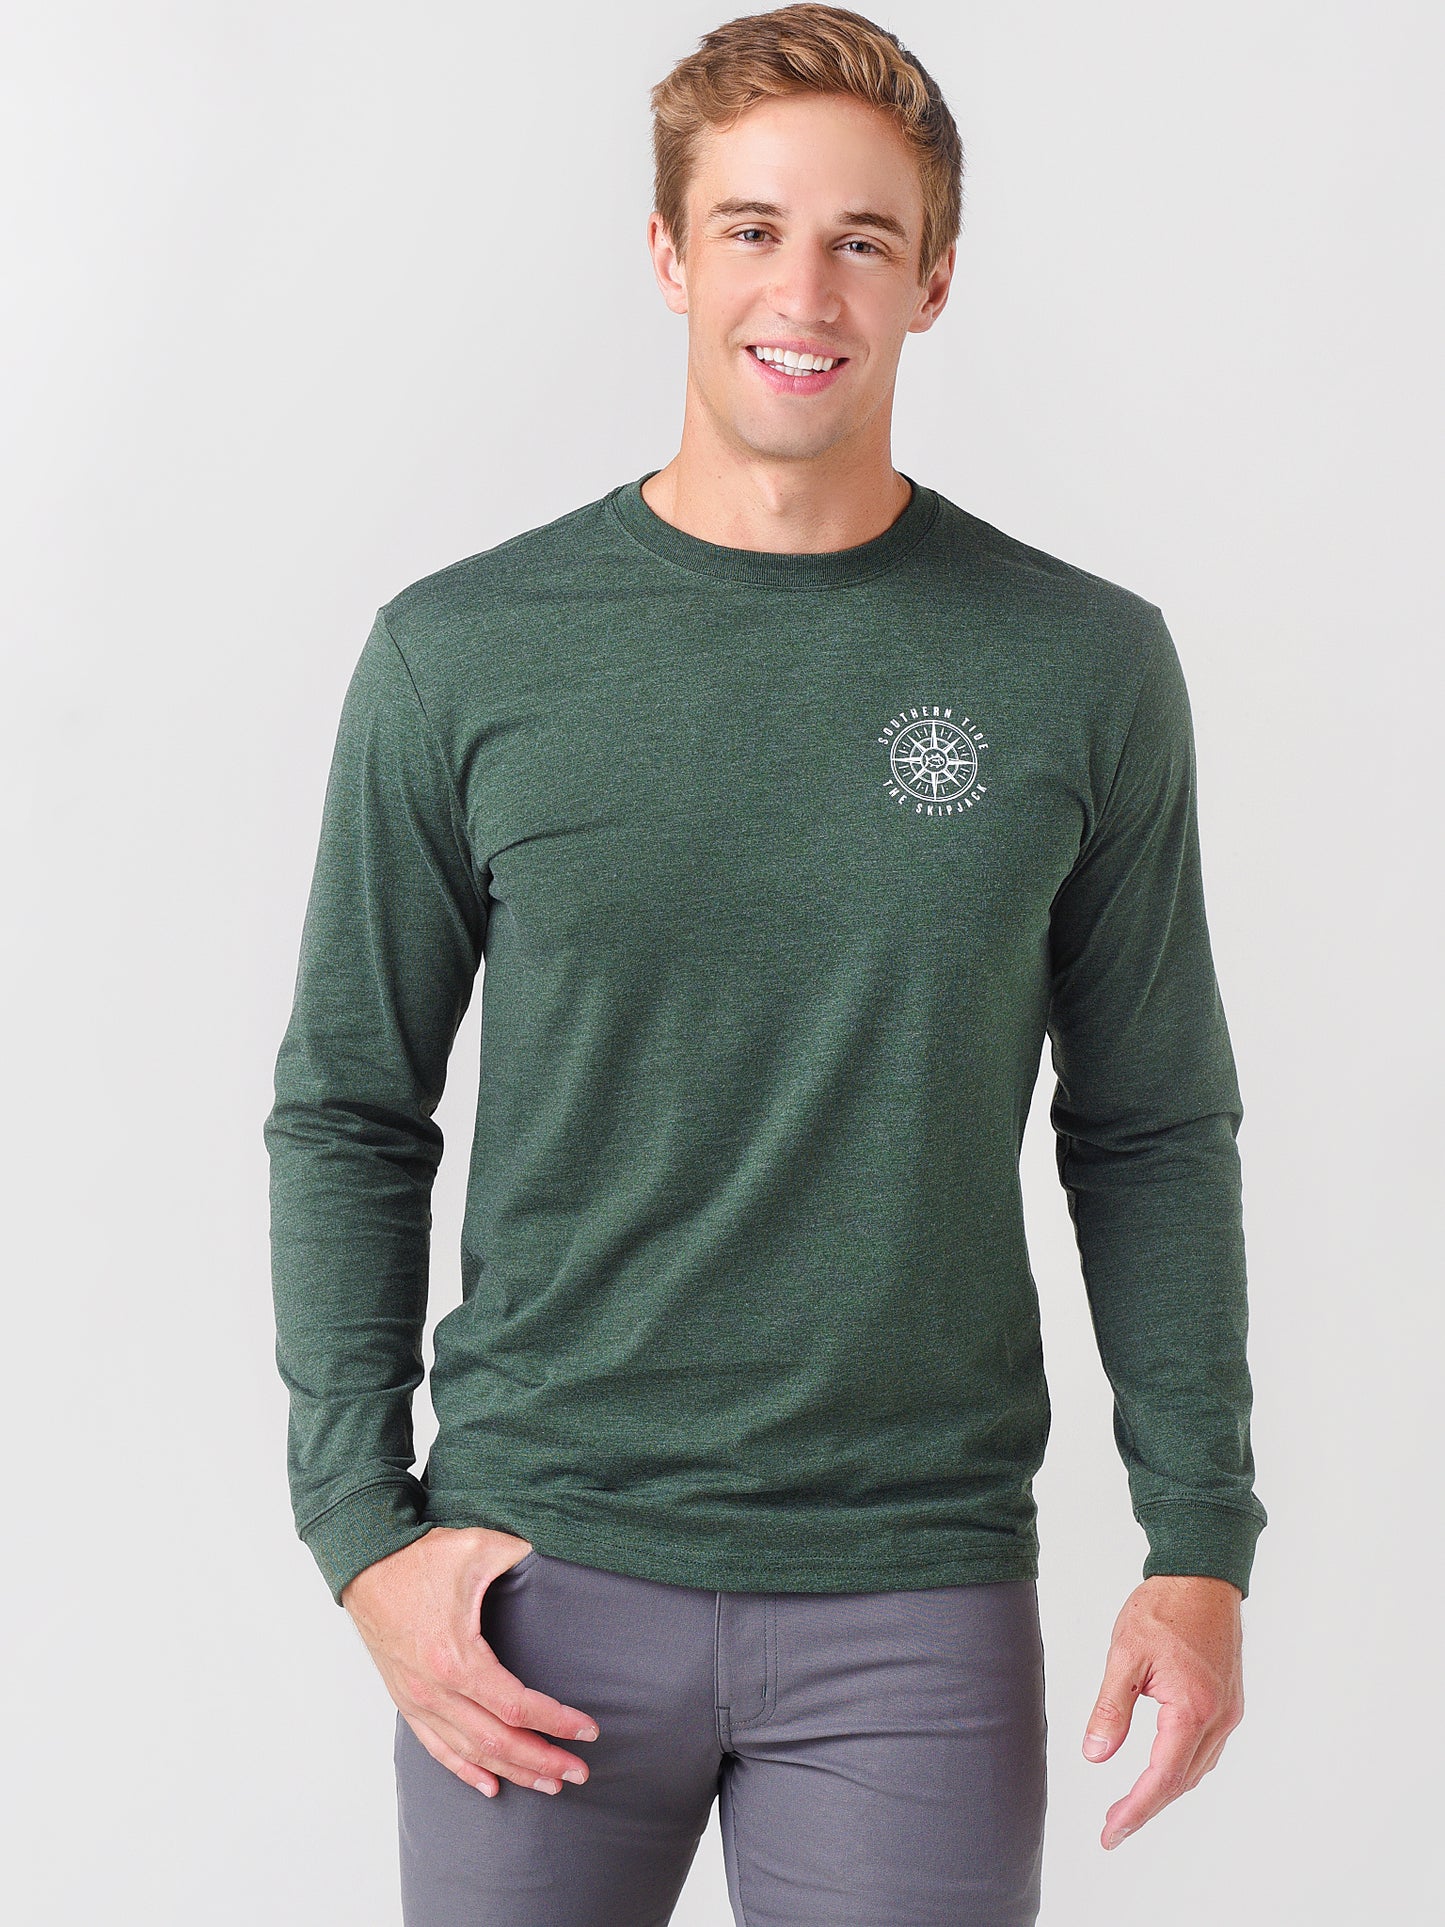 Southern Tide Men's Channel Marker Compass Long Sleeve T-Shirt